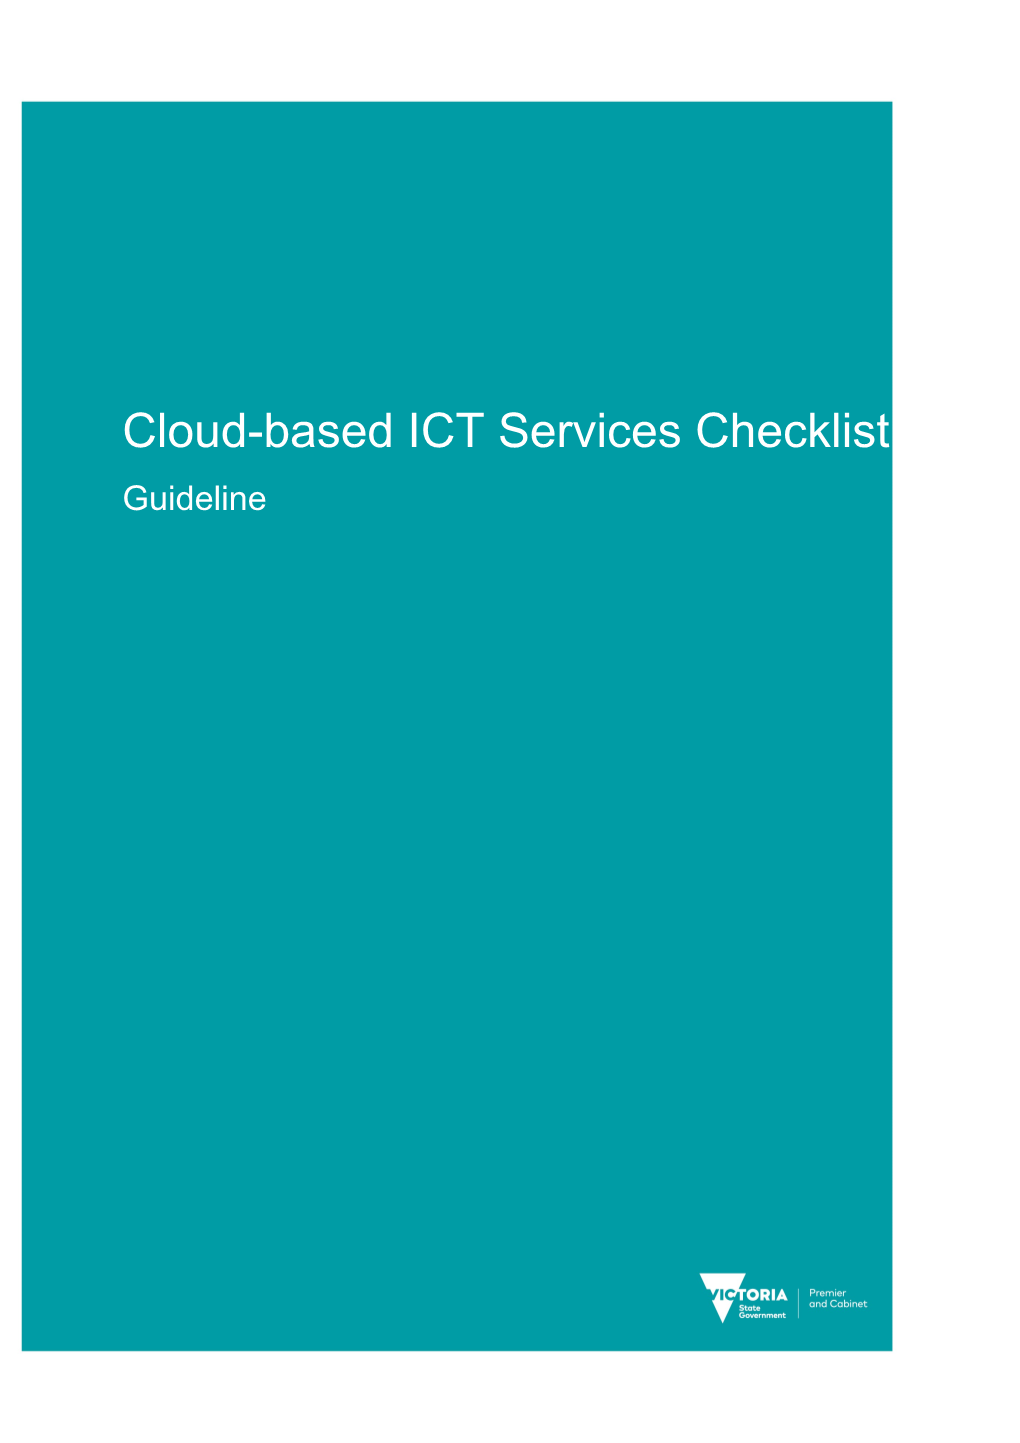 Cloud Services Checklist